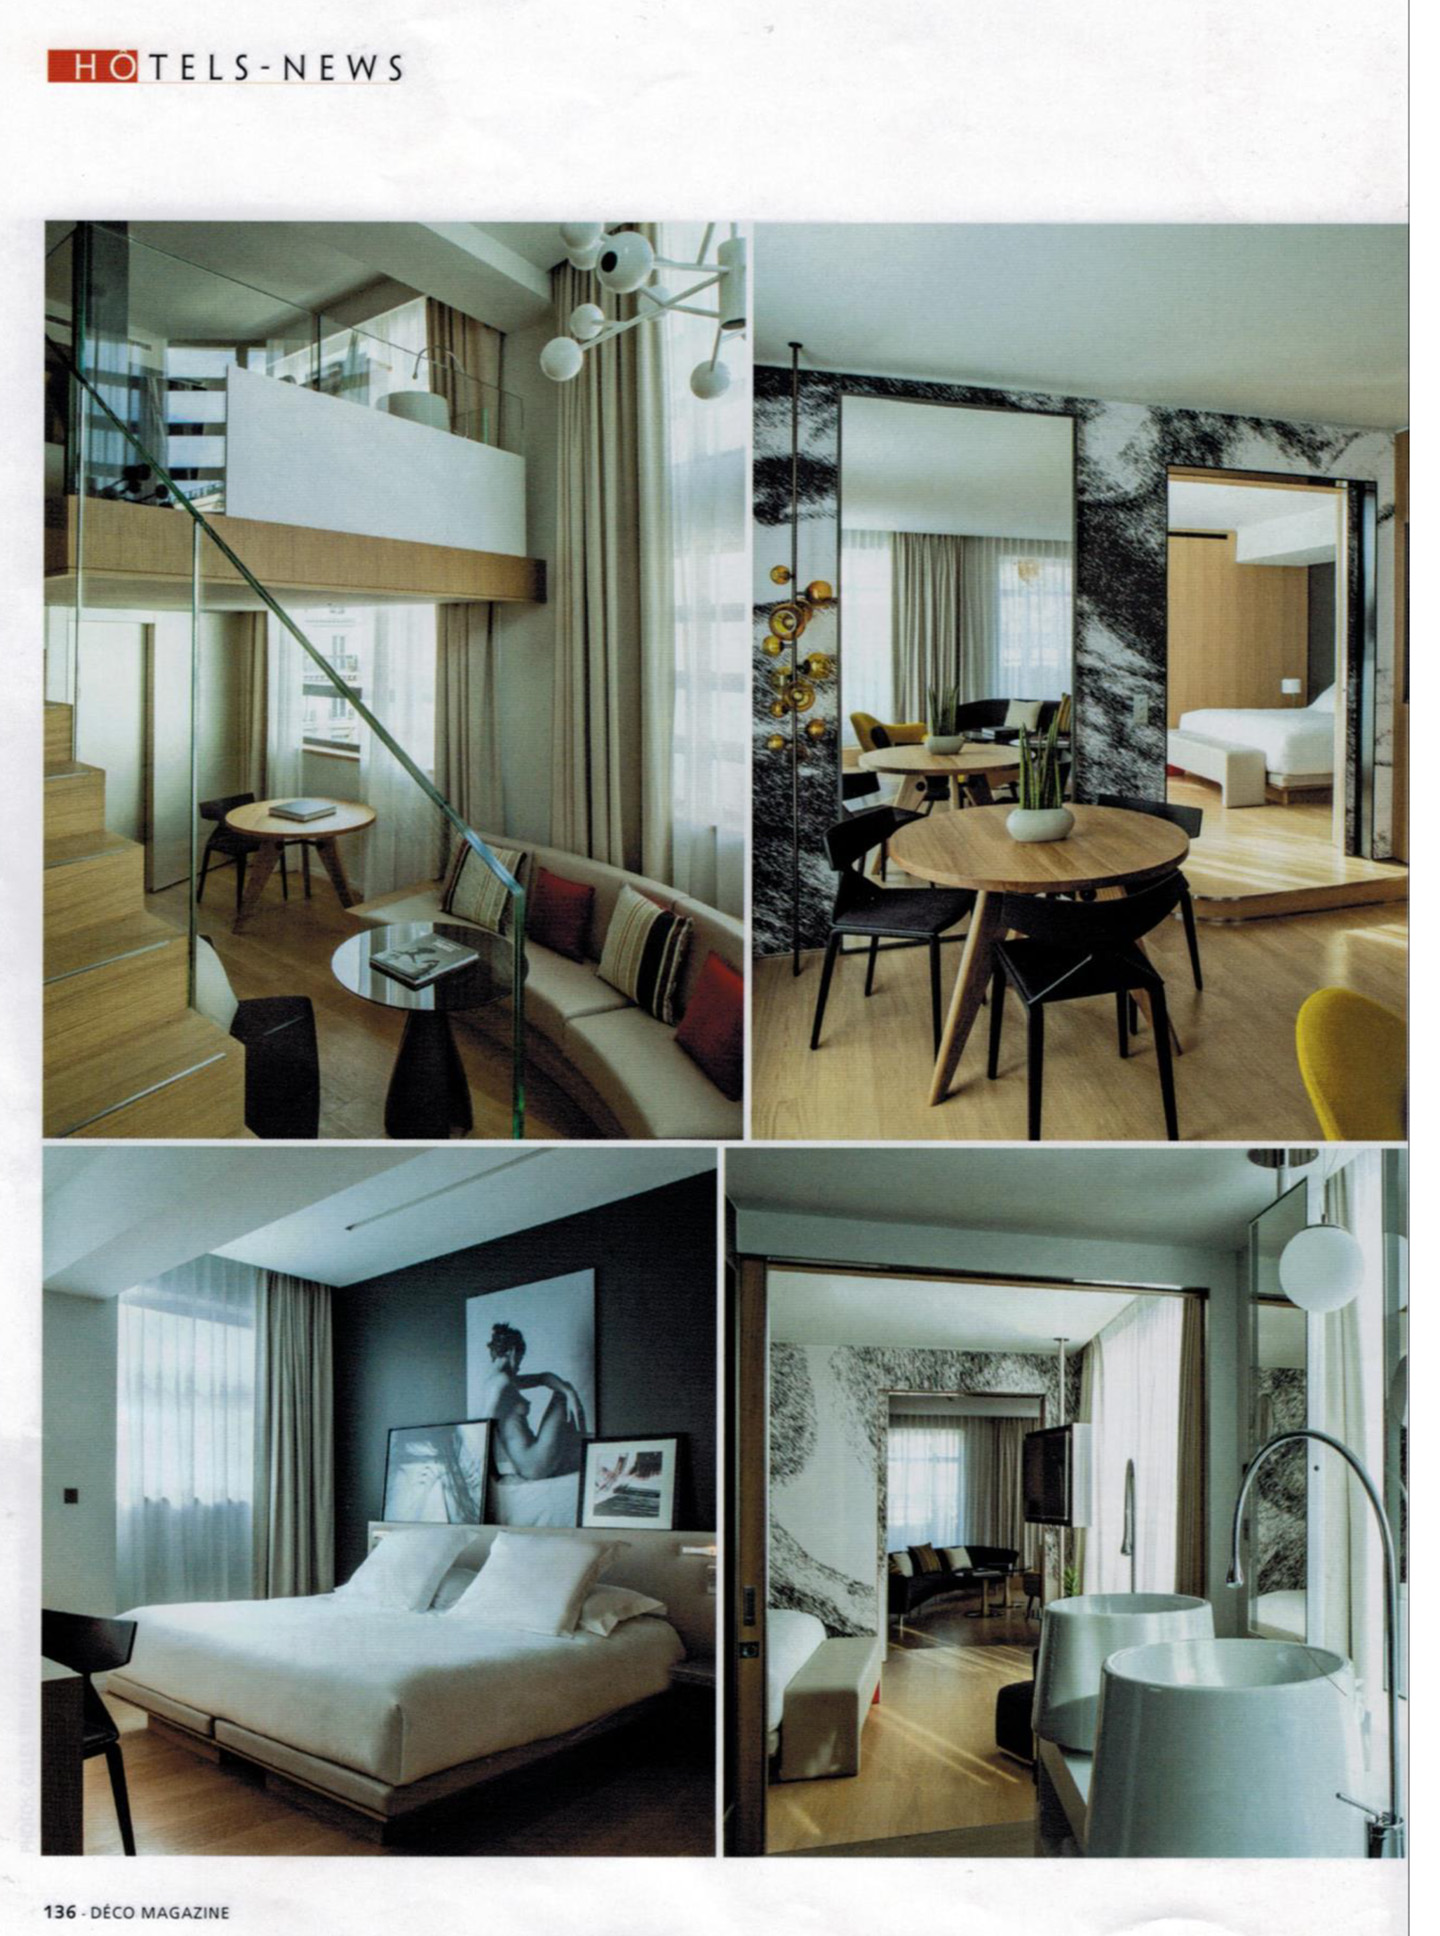 article on the cinq codet in deco magazine, 5 star luxury hotel designed by the interior design studio jean-philippe nuel